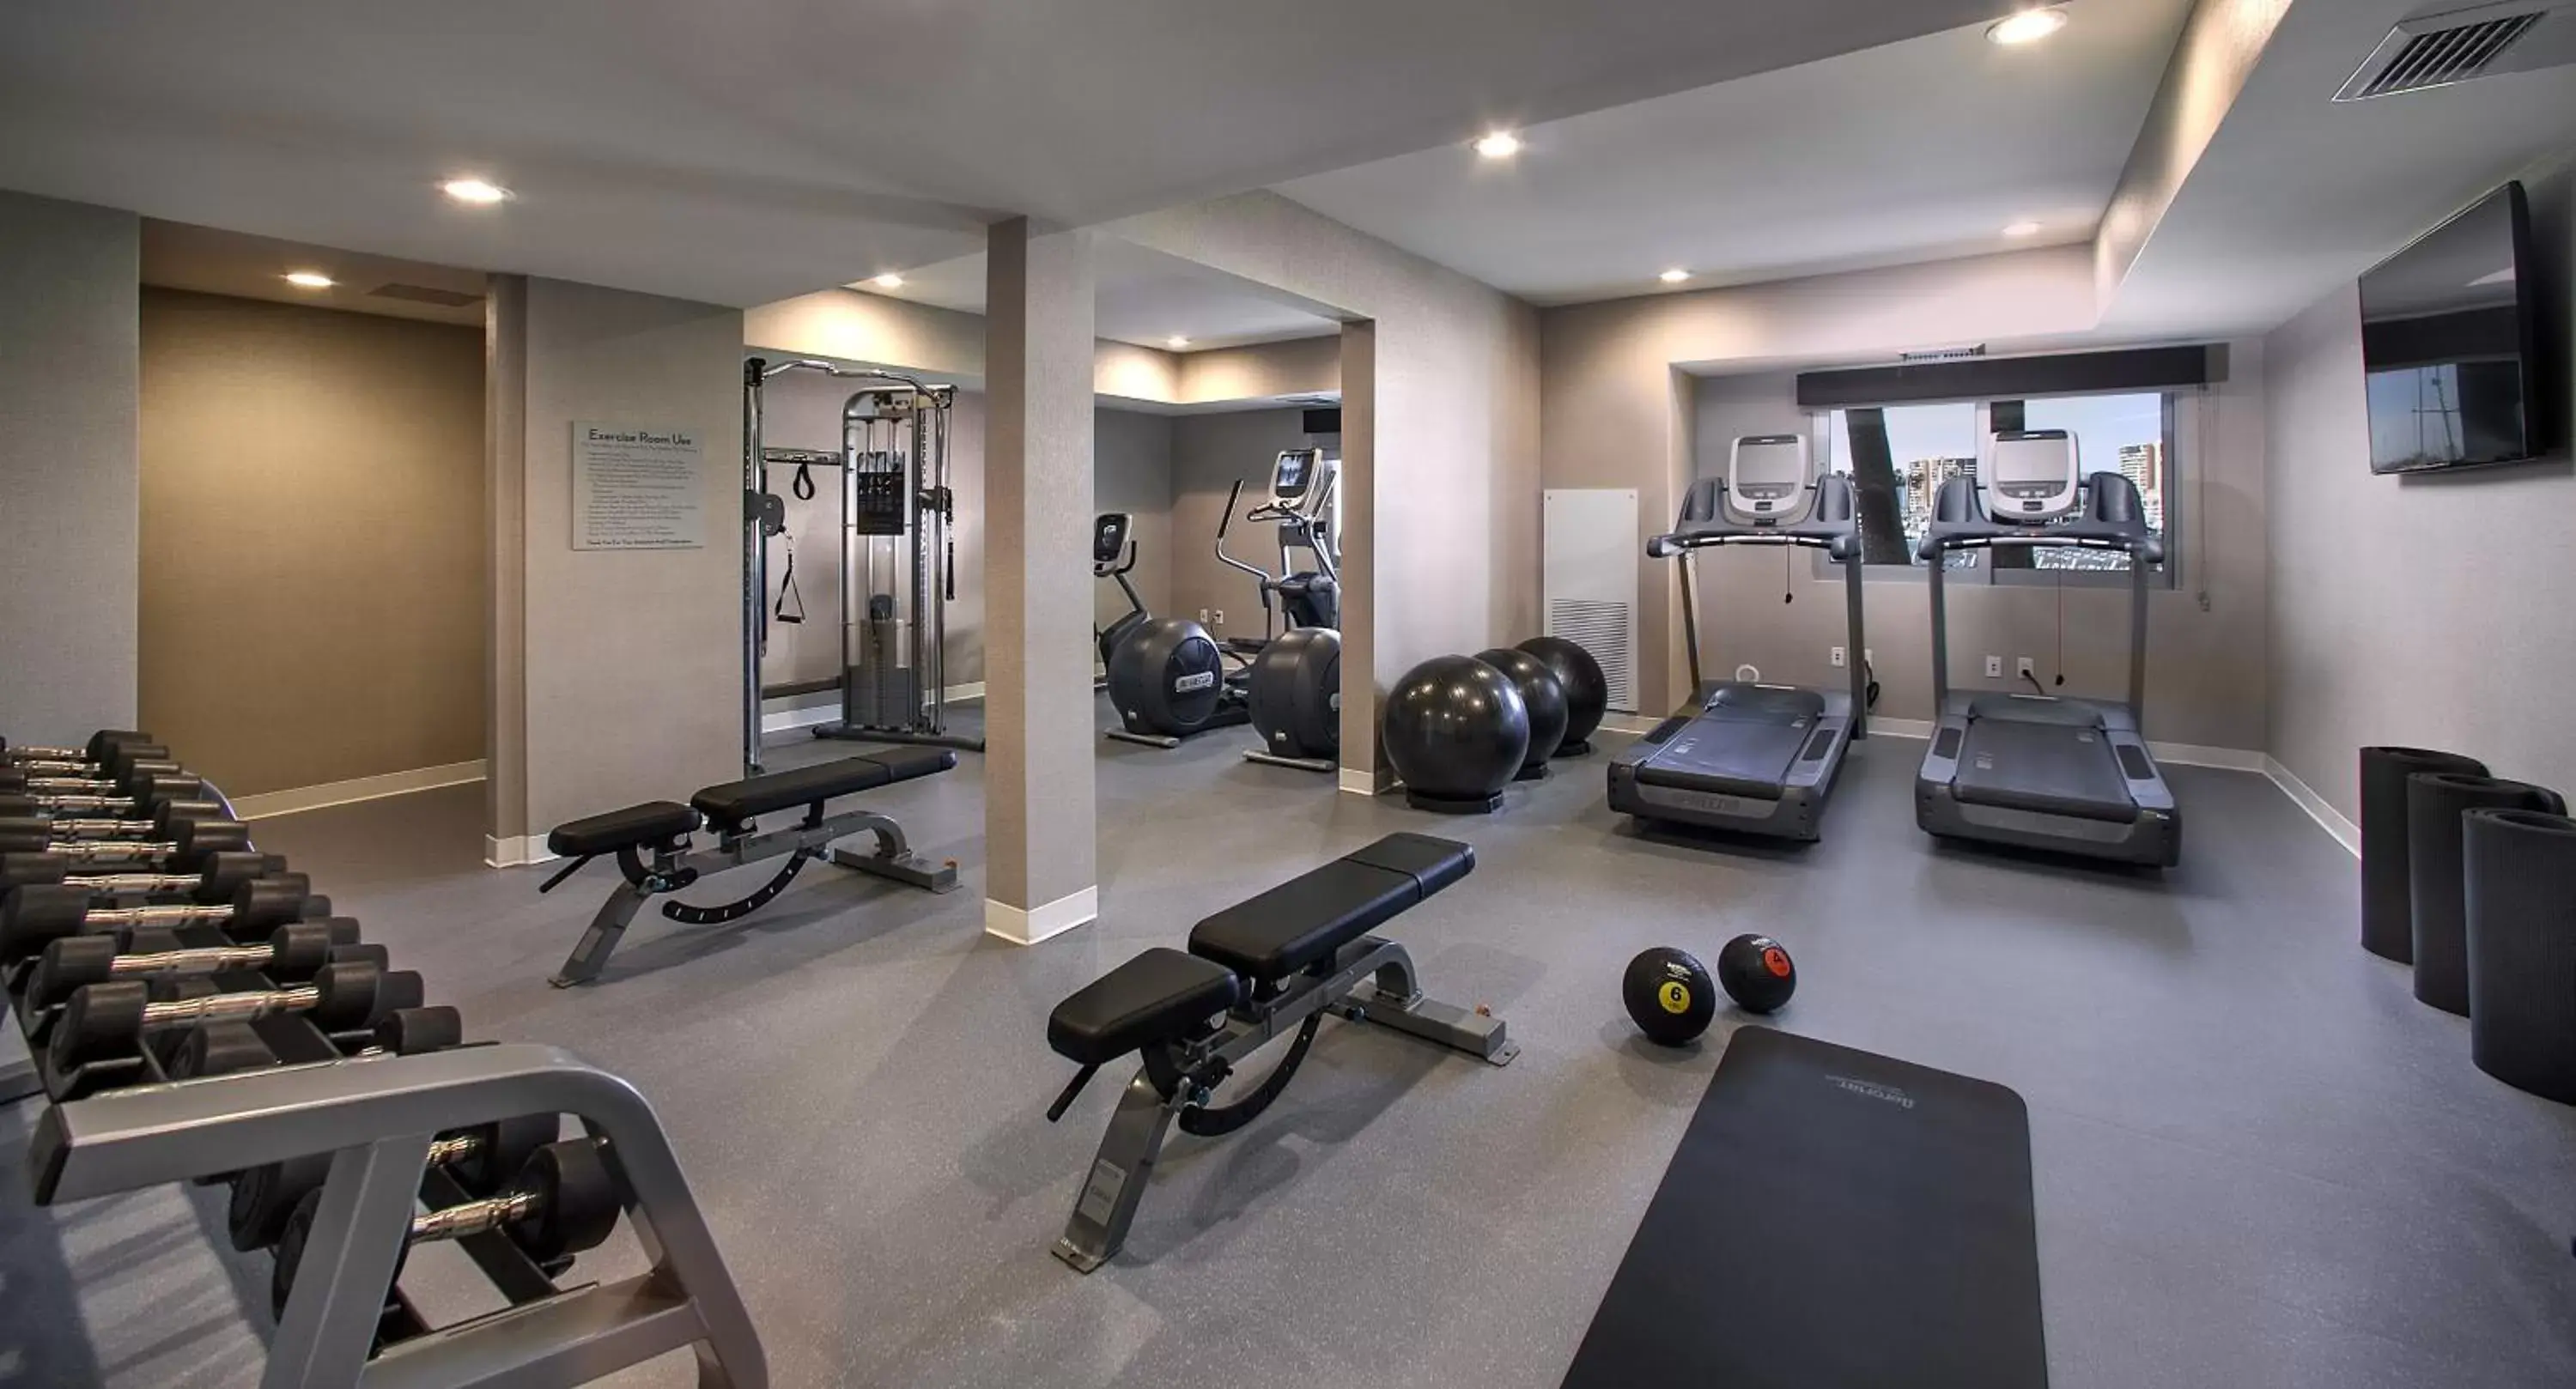 Fitness centre/facilities, Fitness Center/Facilities in Marina del Rey Hotel